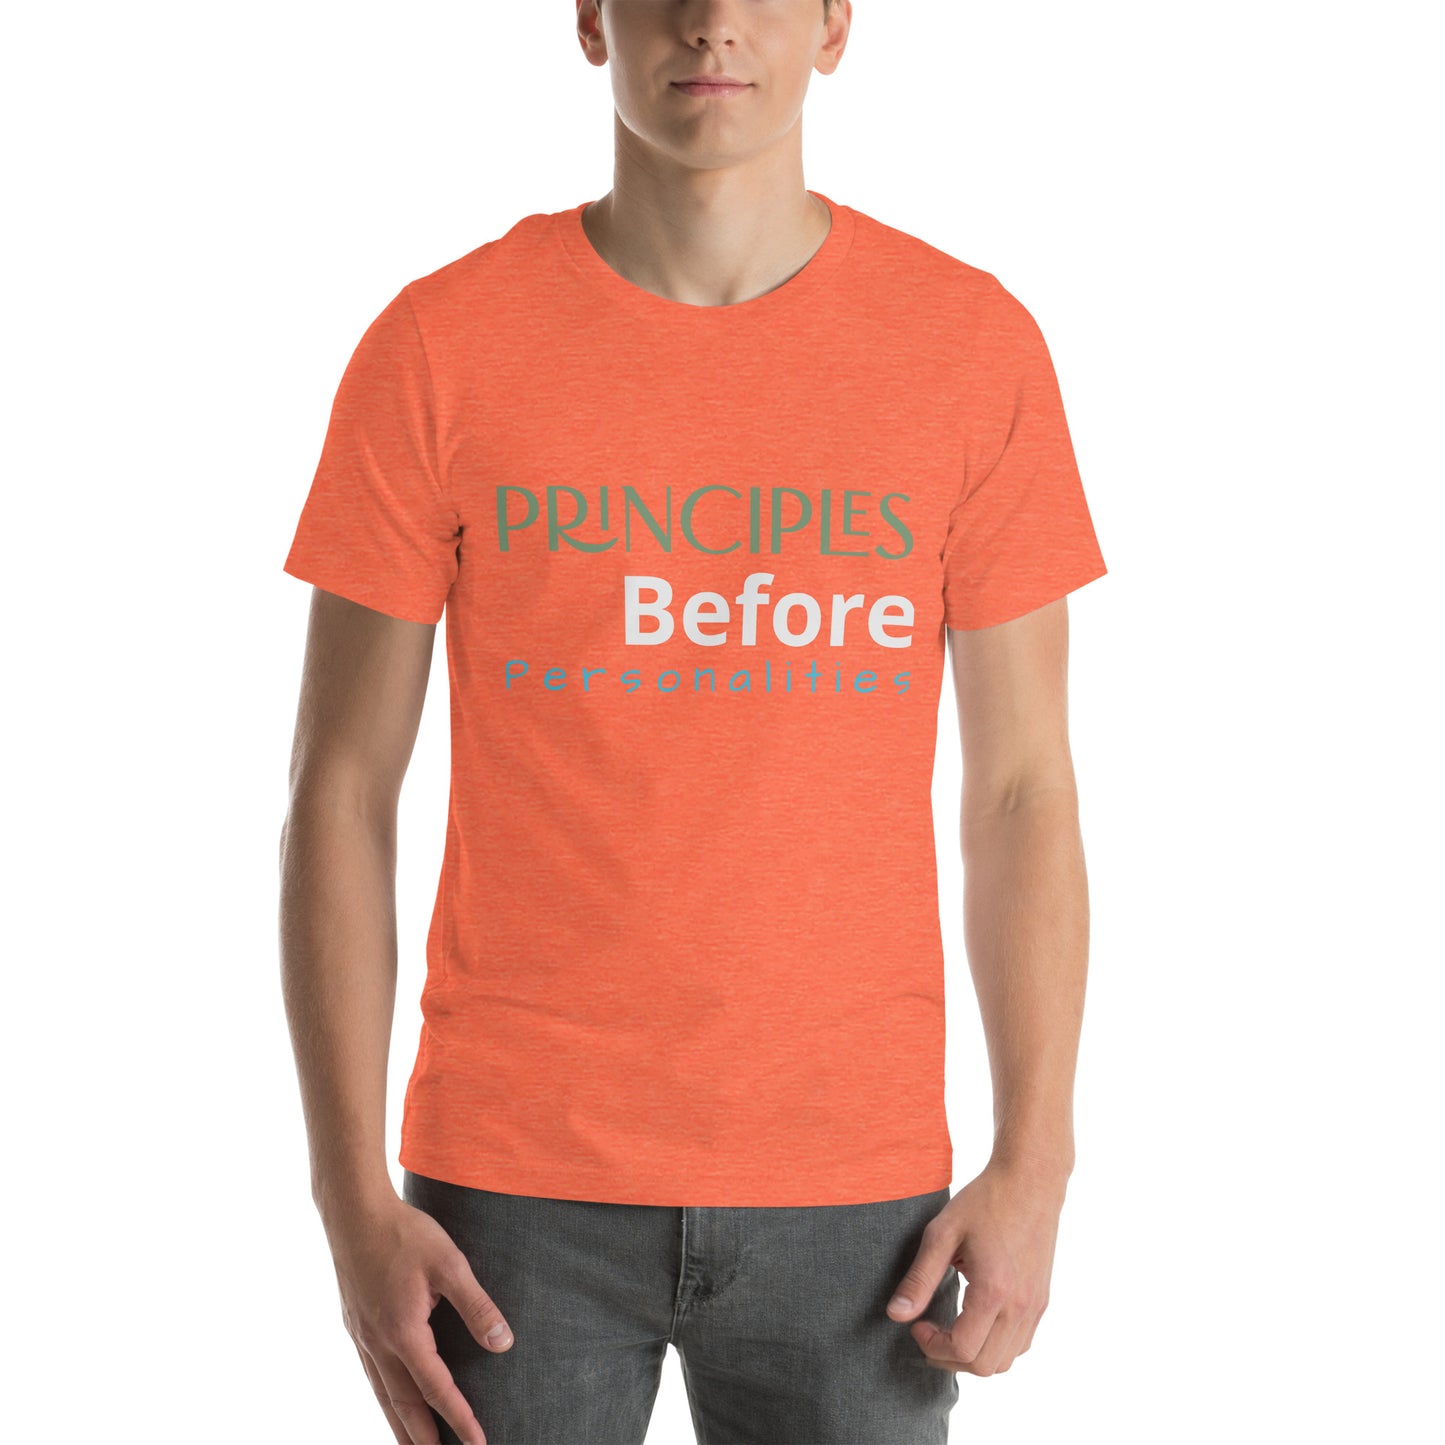 Principles Before Personalities Unisex T-Shirt